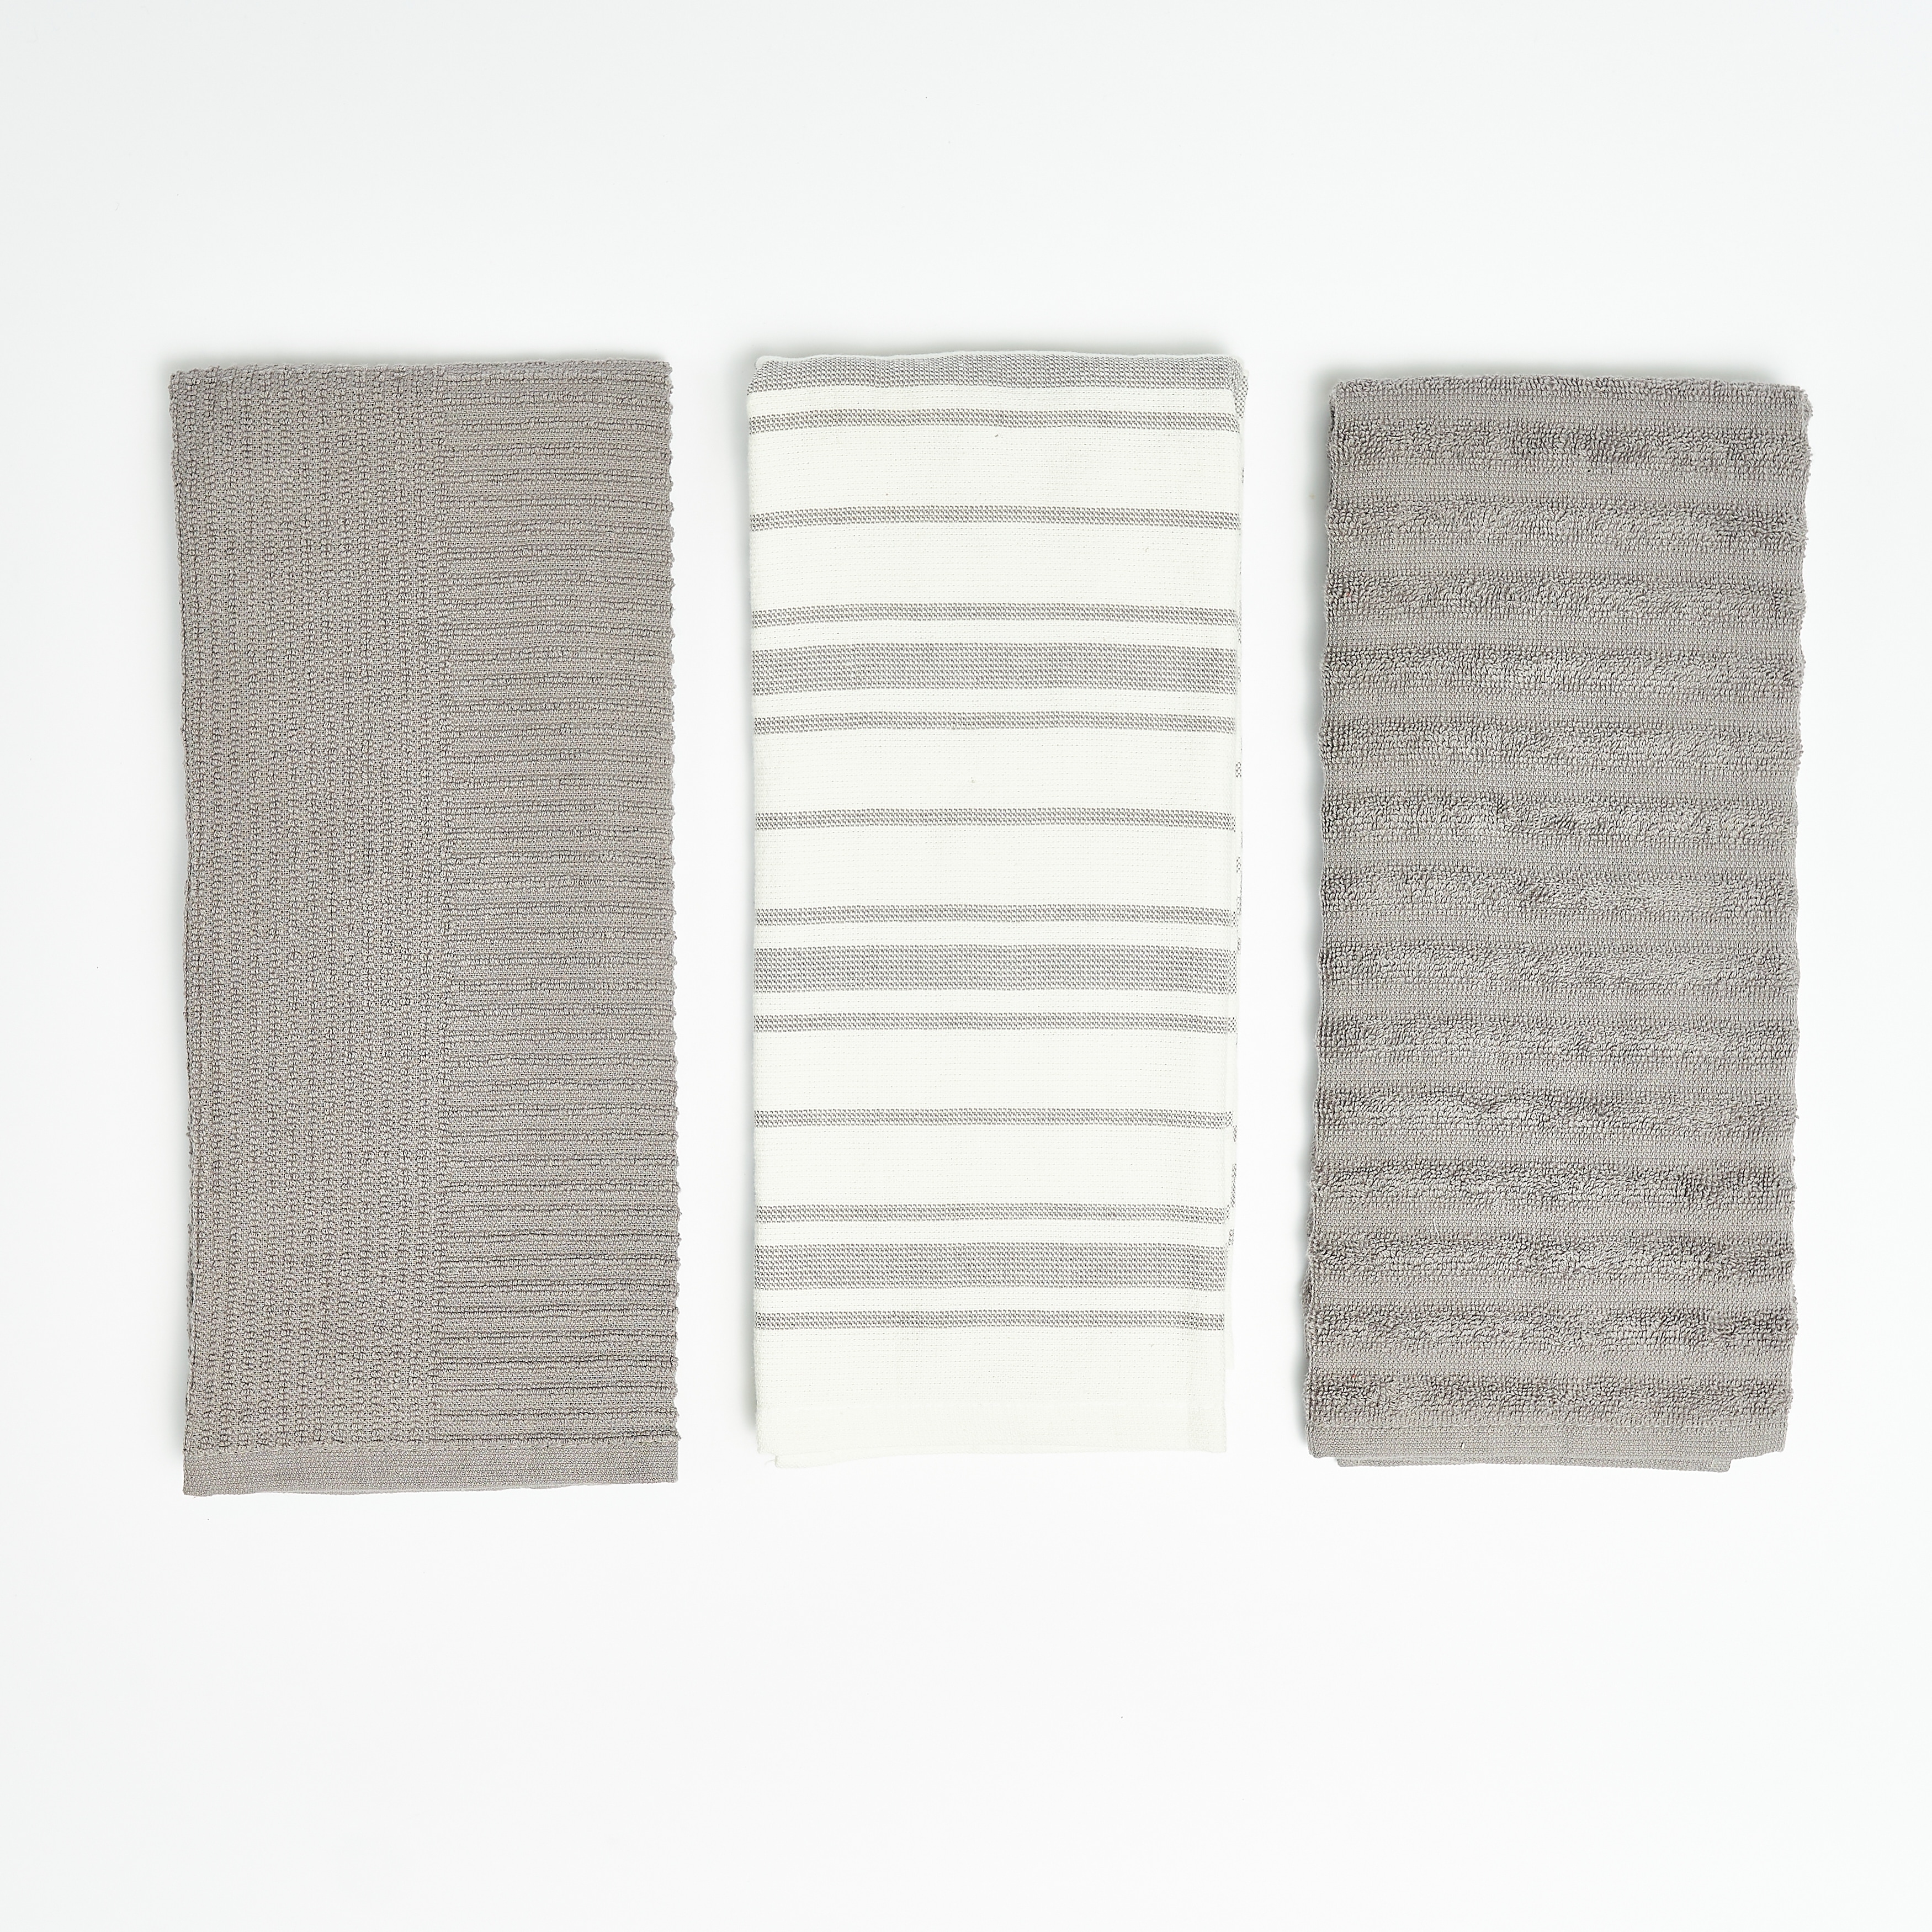 NAUTICA KITCHEN TOWELS (3) WHITE GRAY STRIPES 100% COTTON 16 X 26 NWT